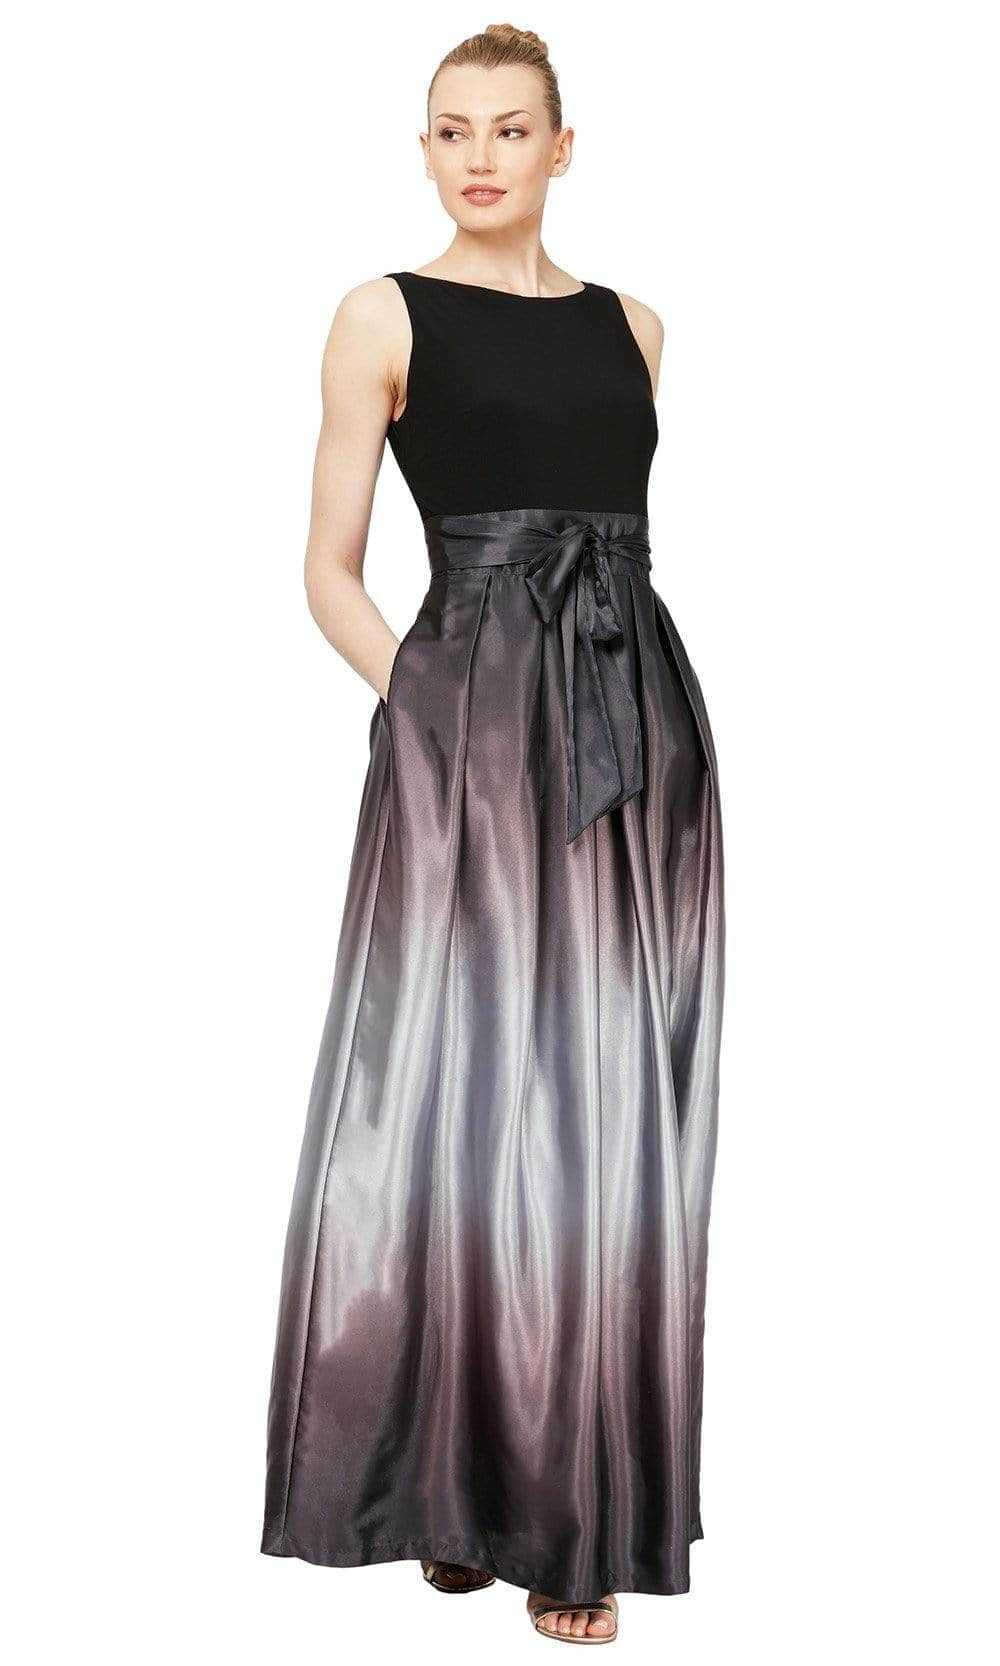 SLNY, SLNY - Ombre Bateau Formal Dress 119435M - 1 pc Black/Silver In Size 18 Available